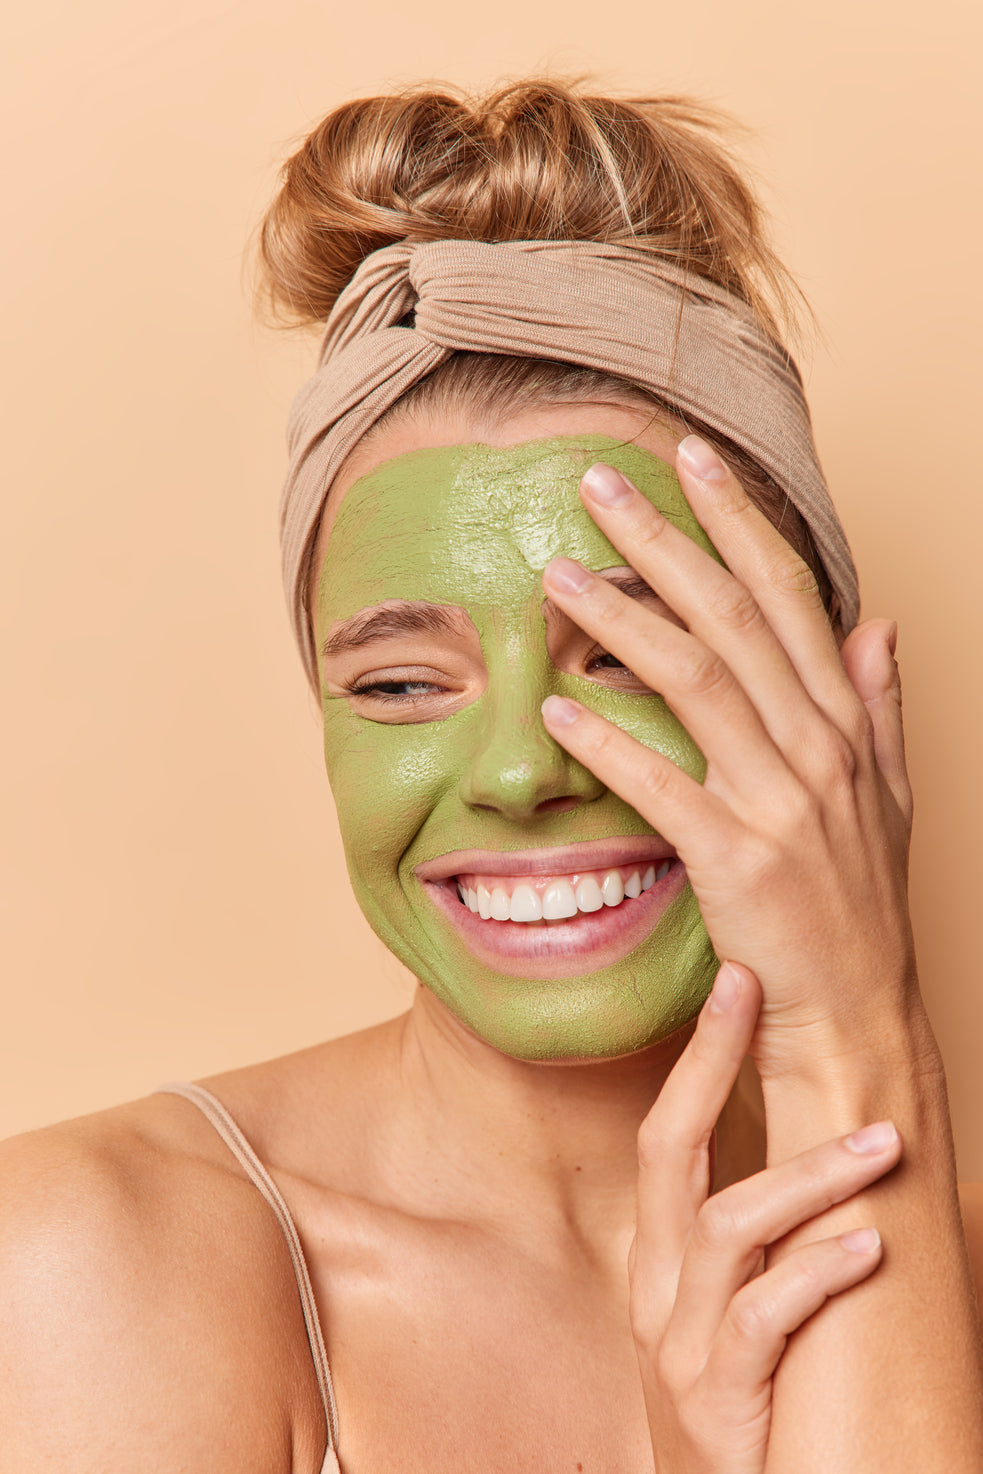 "DIY Natural Face Masks for Glowing Skin"